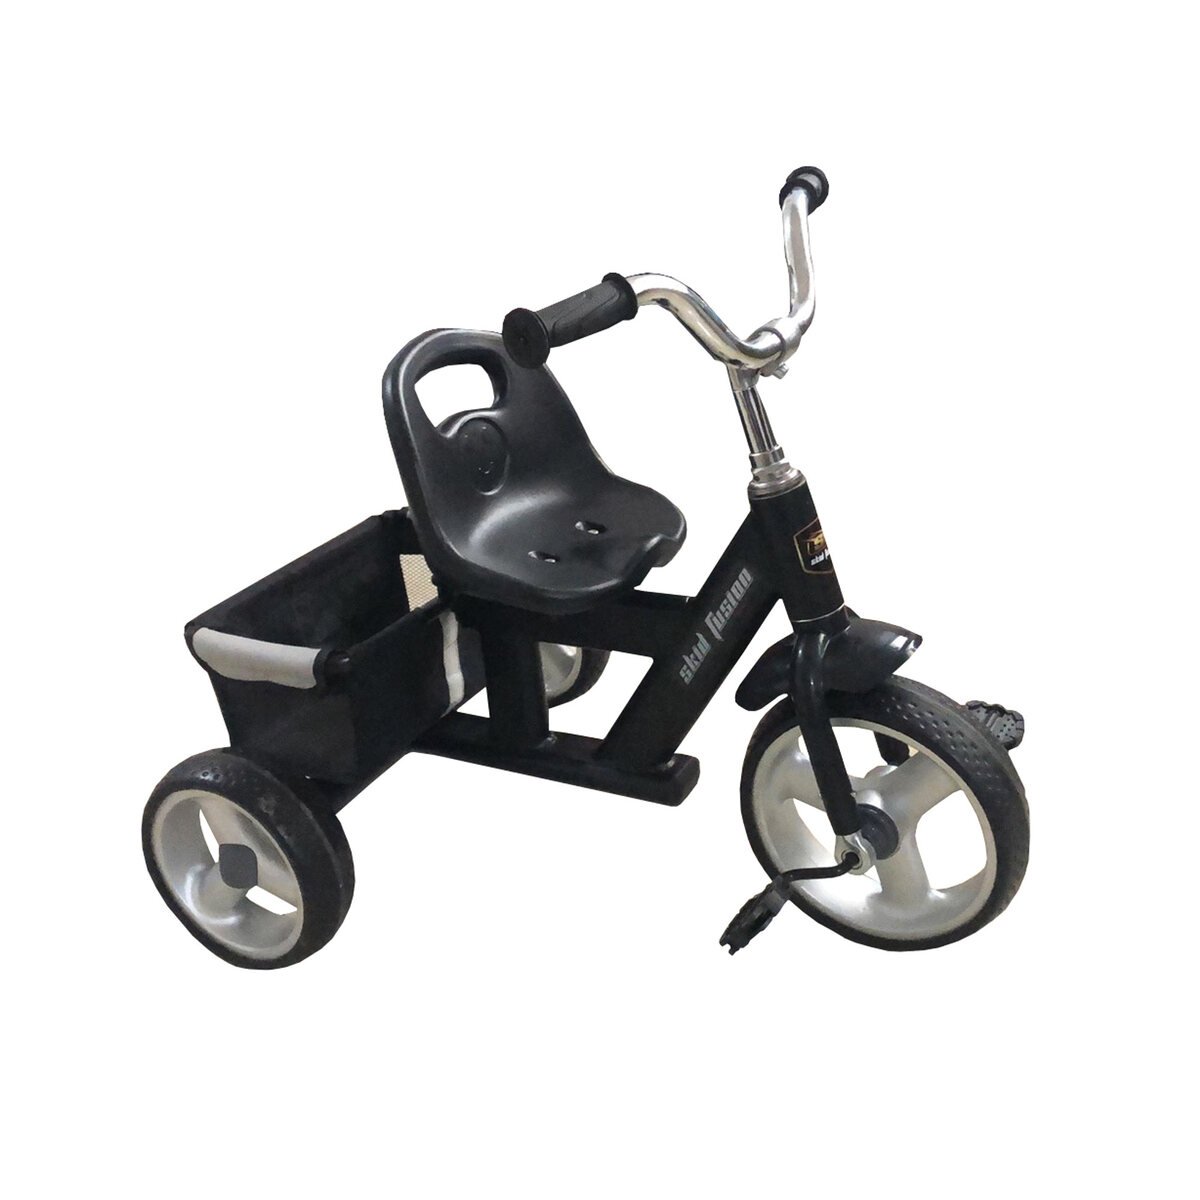 Skid Fusion Childrens Tricycle YQM-315 Black